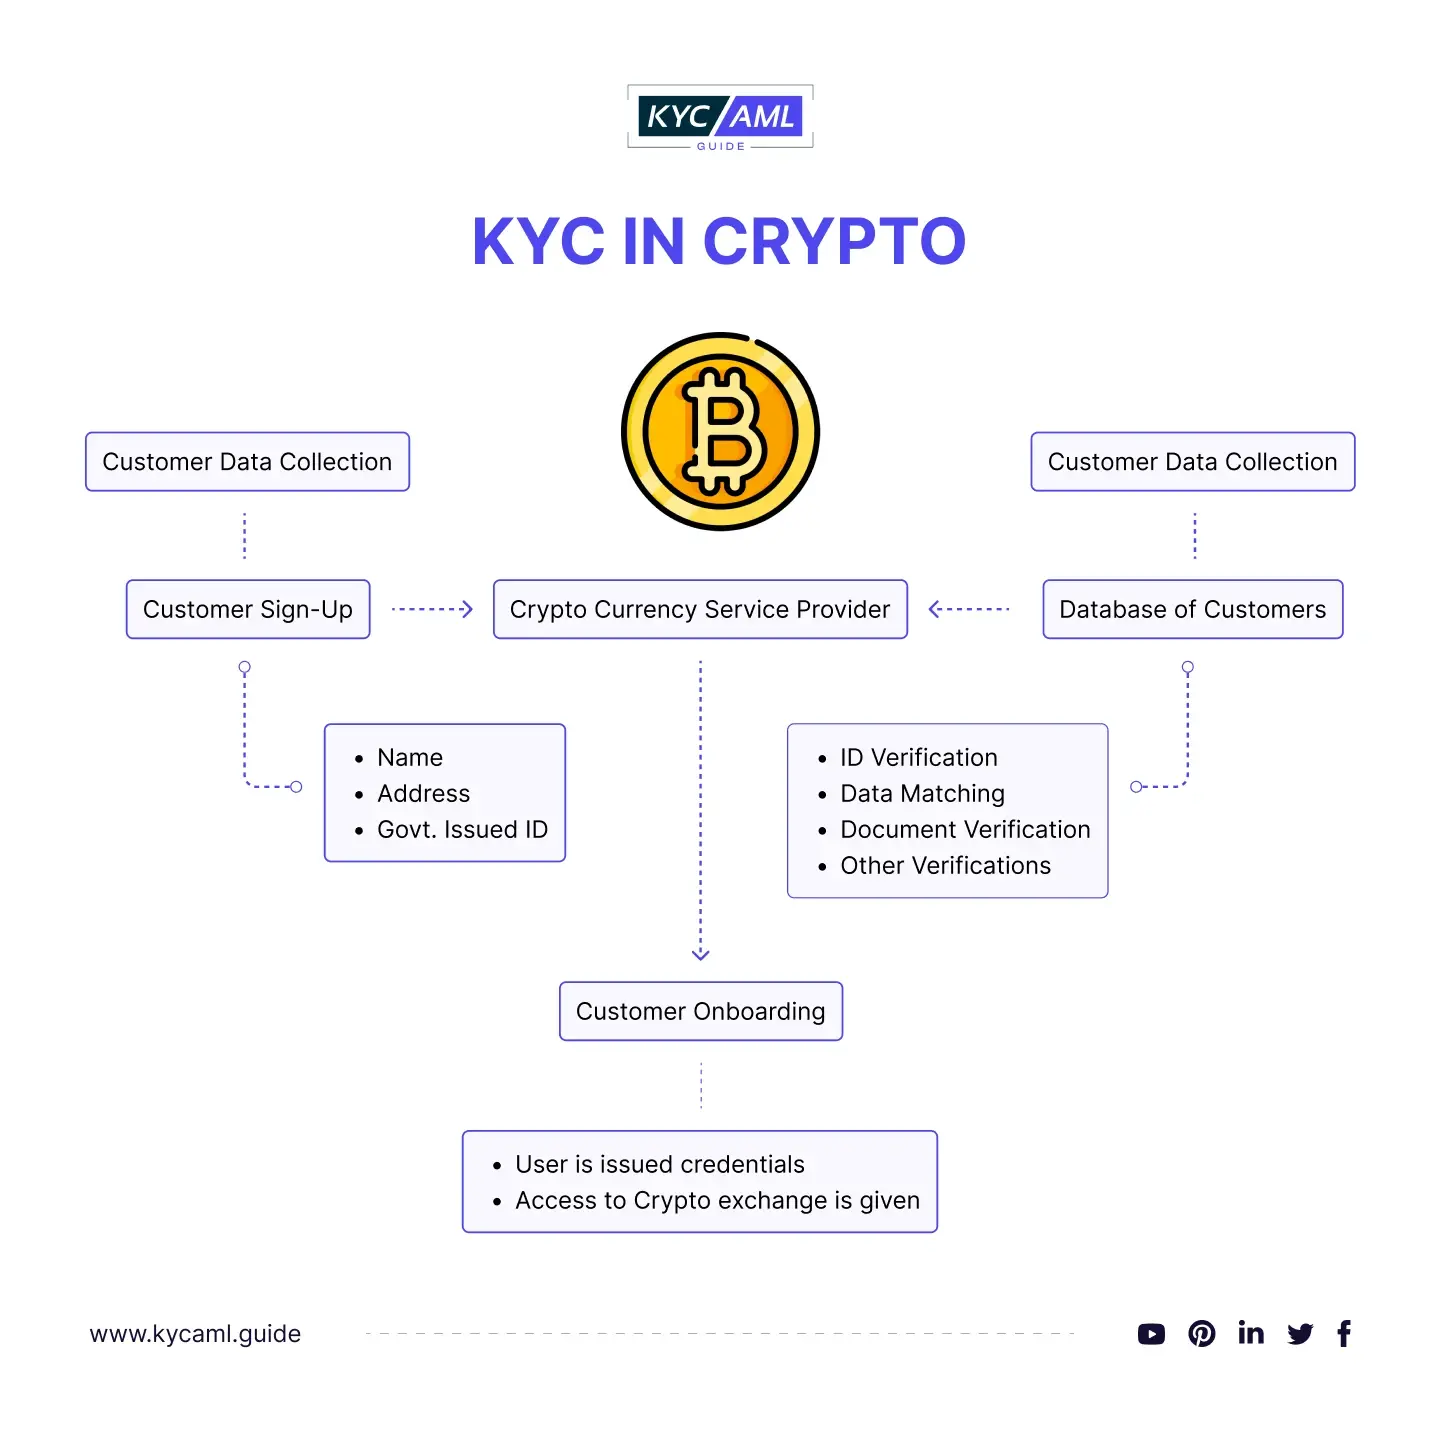 KYC in Crypto